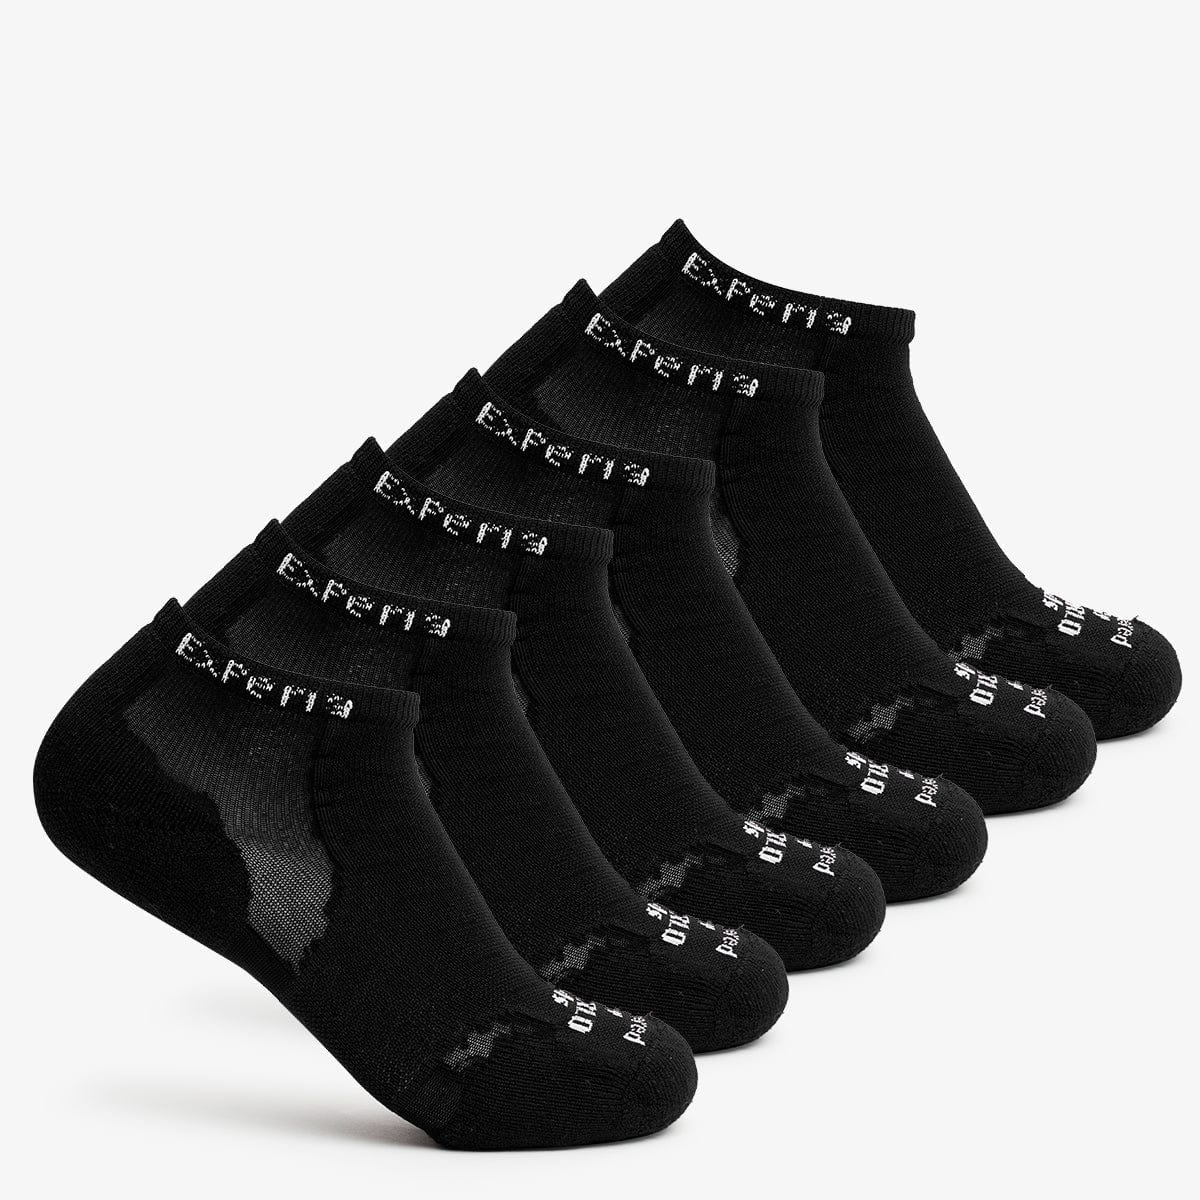 Thorlo Experia TECHFIT Light Cushion Low-Cut Socks  -  Small / Black on Black / 6-Pair Pack